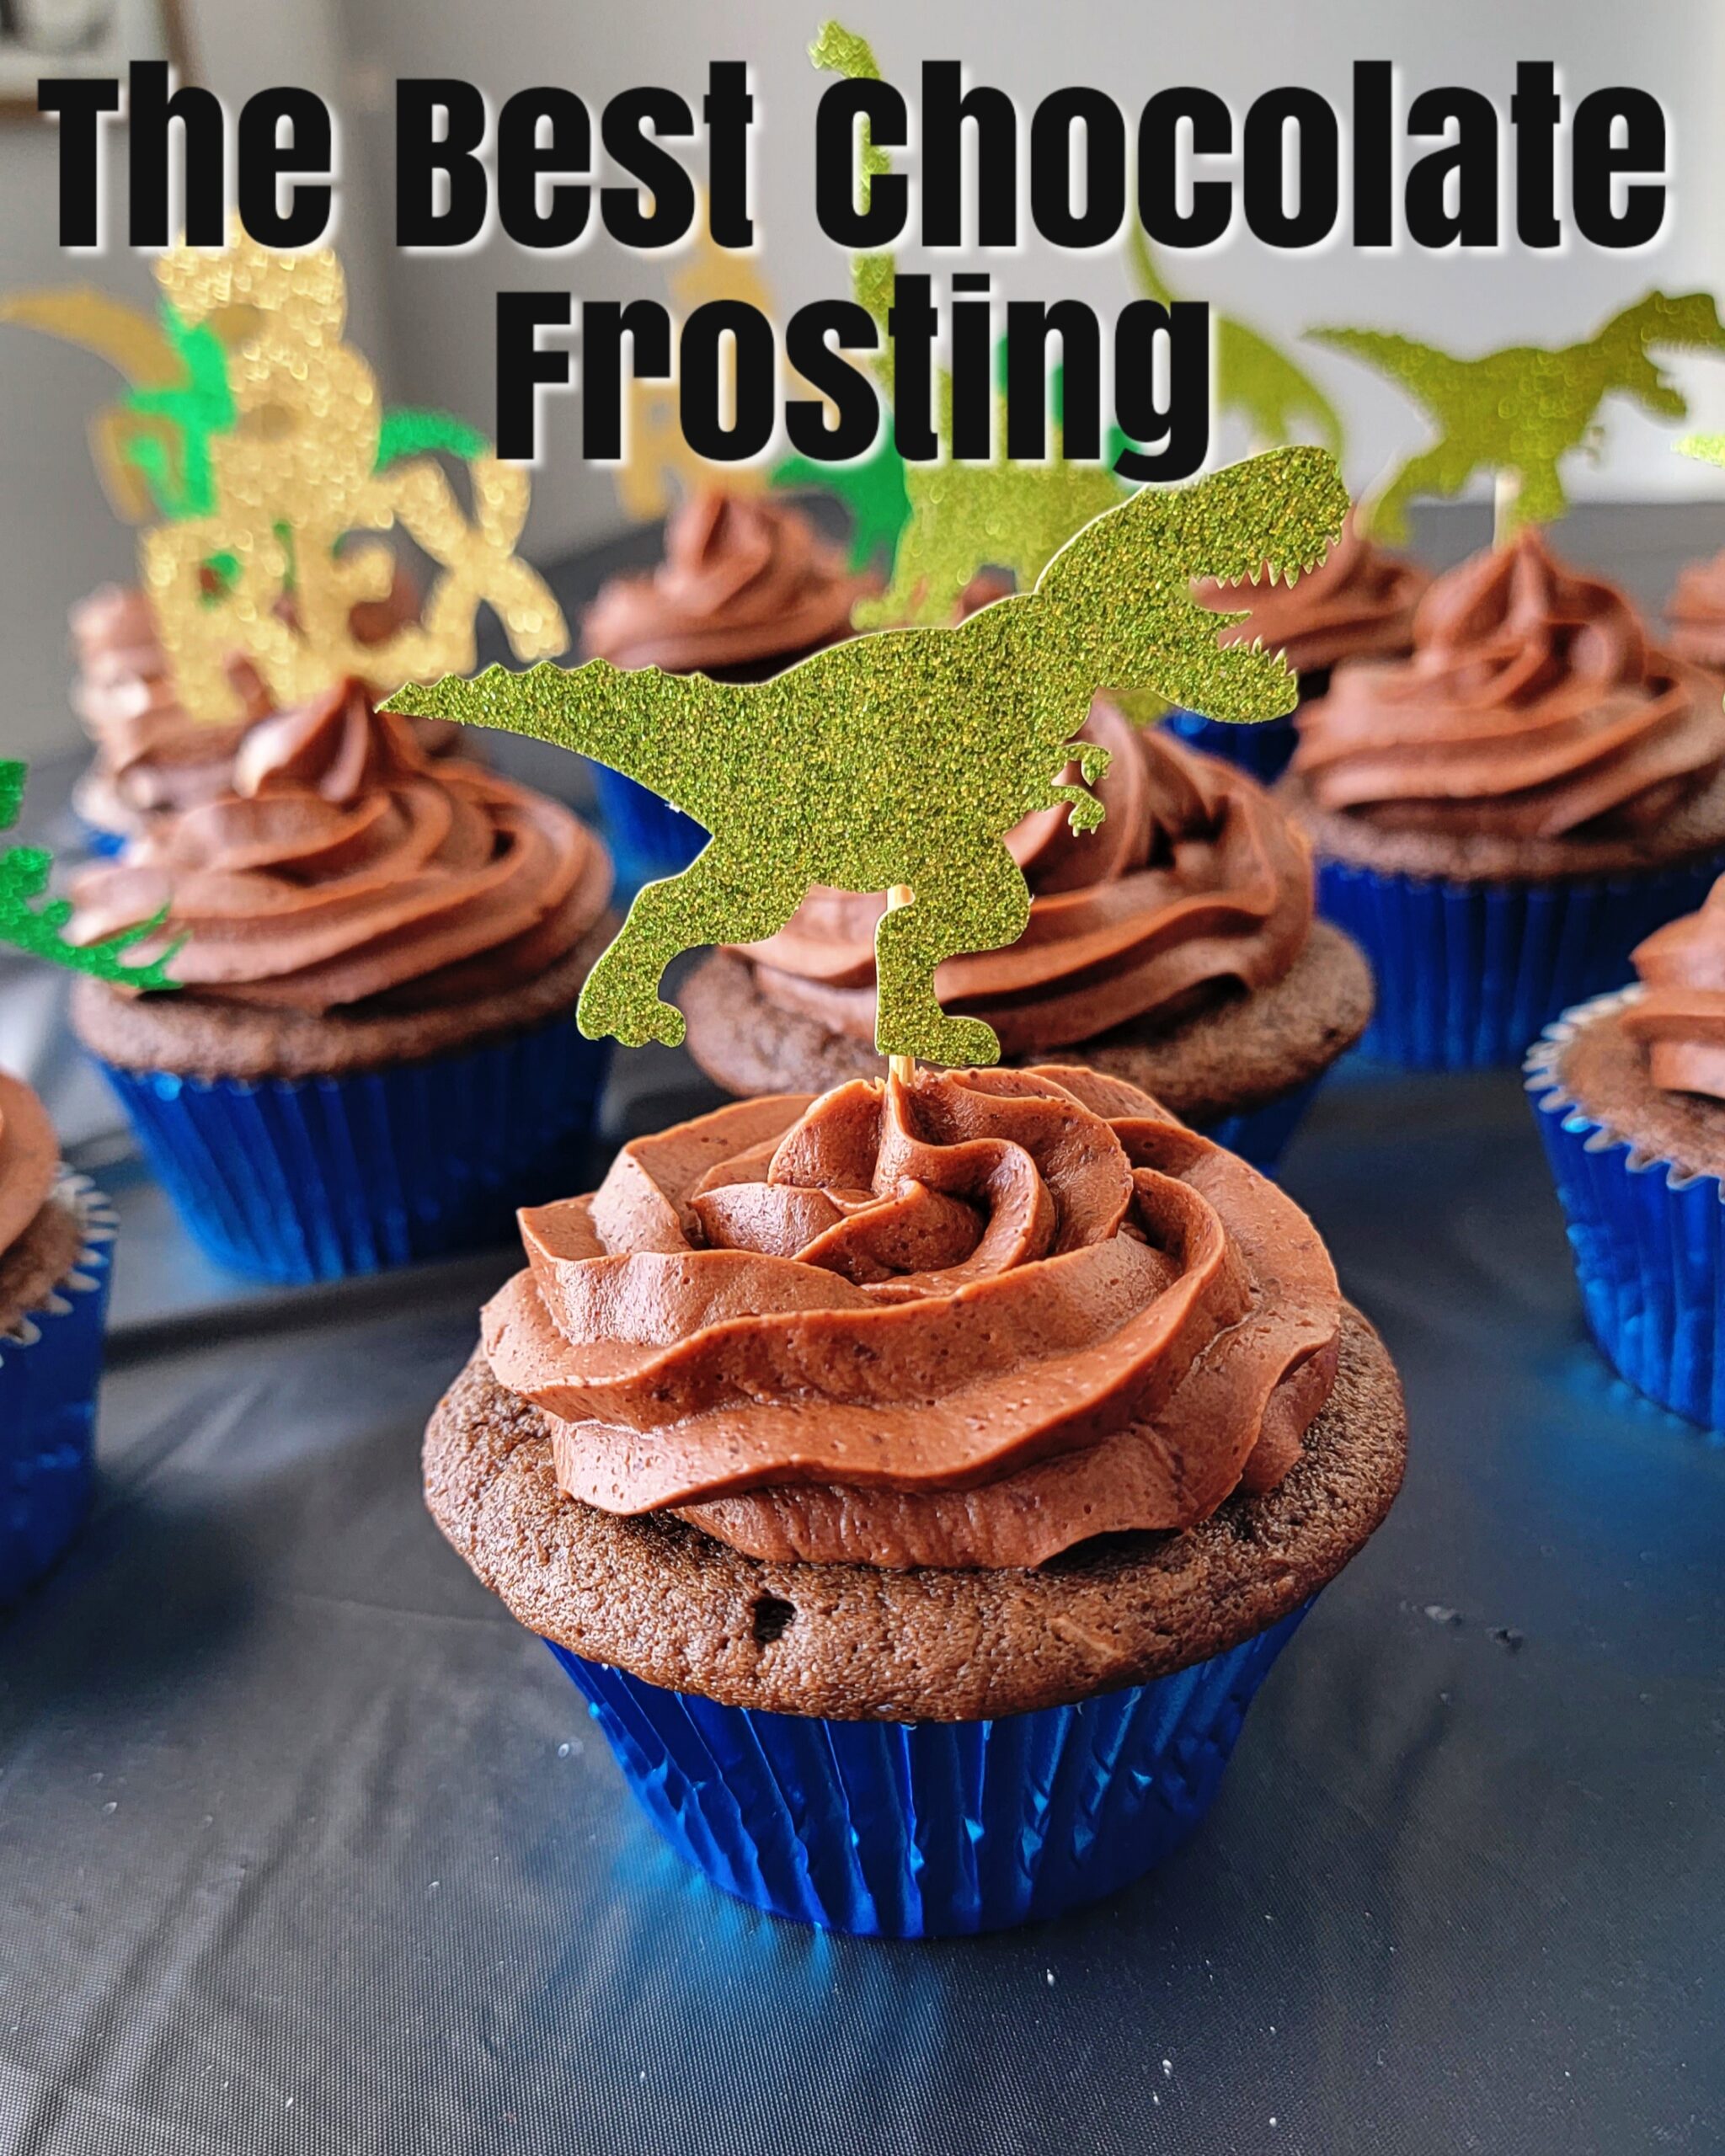 Best Chocolate Frosting #chocolate #frostingrecipe #birthdaycake #cakerecipe #dessert